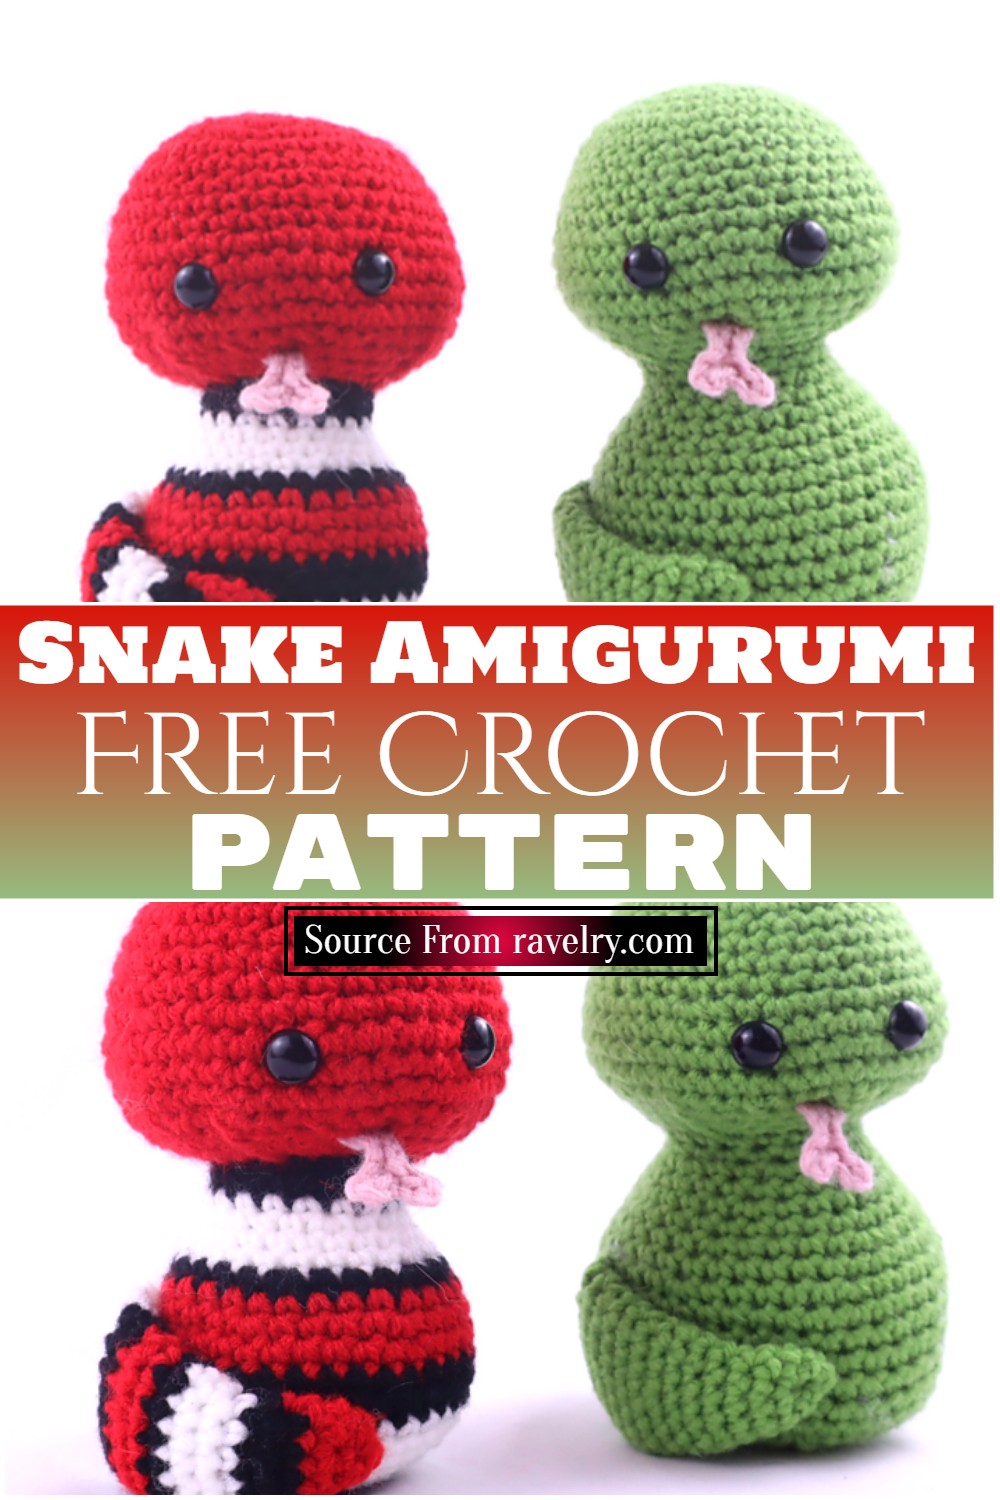 Free Crochet Snake Amigurumi ​pattern